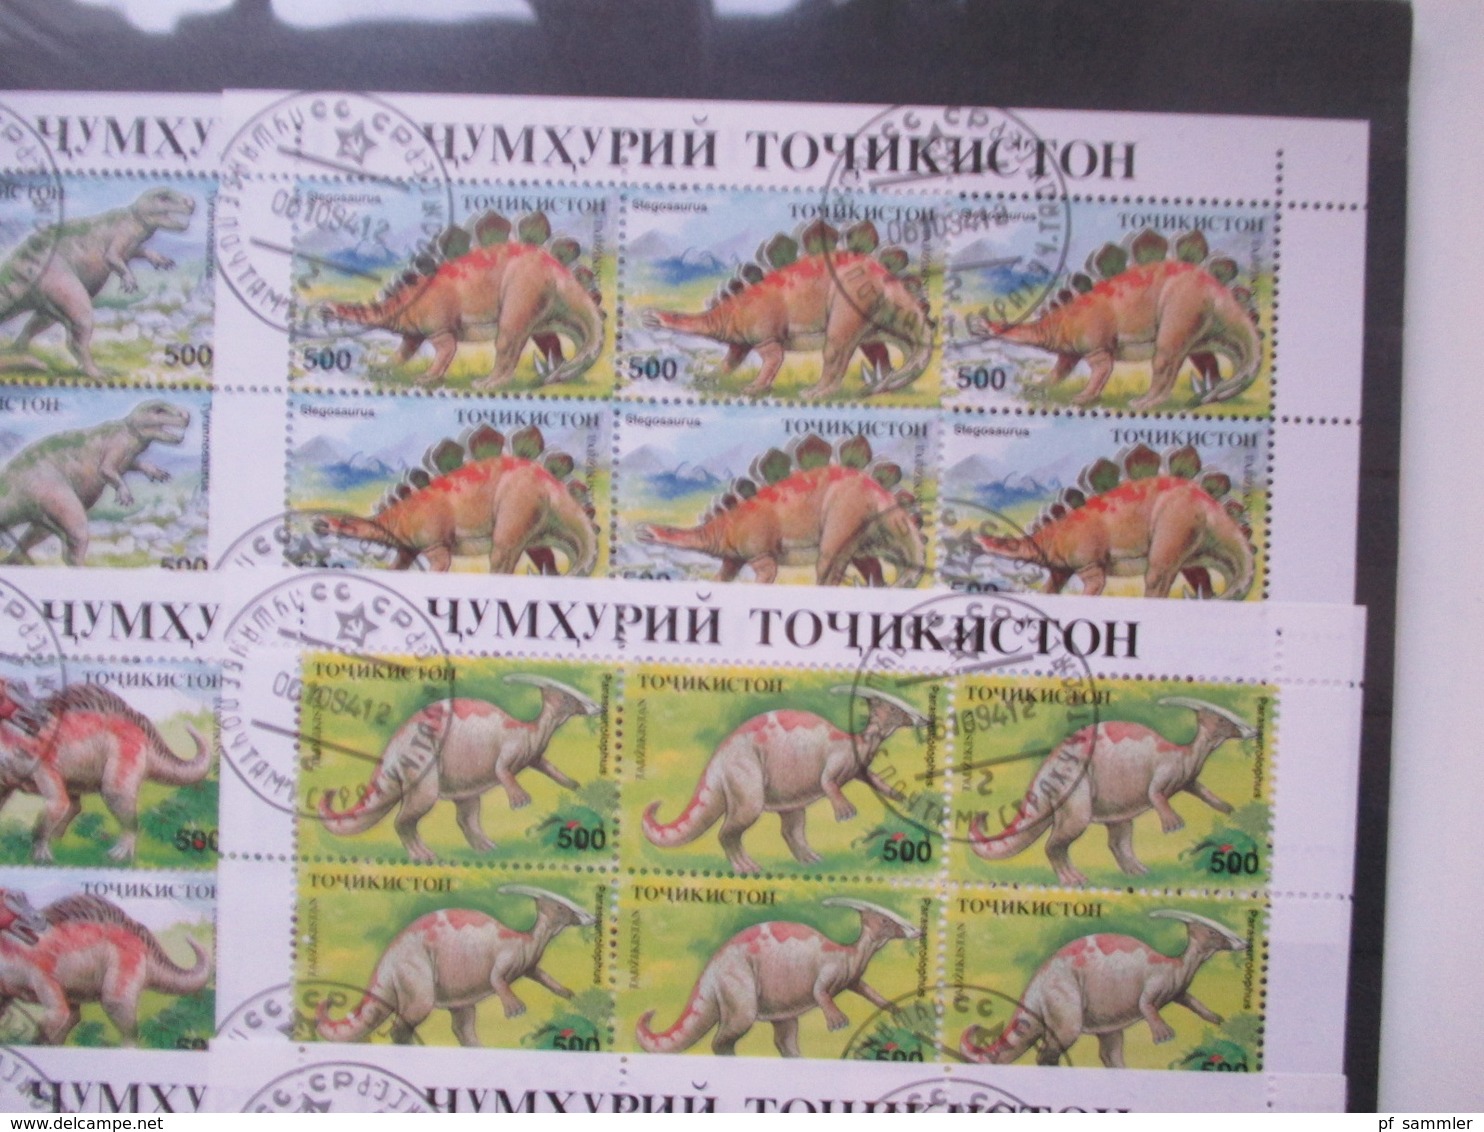 Tadschikistan Blocks / KLB und ein ZD Block Motiv Dinosaurier Stegosaurus / Tyrannosaurus usw. gstempelt